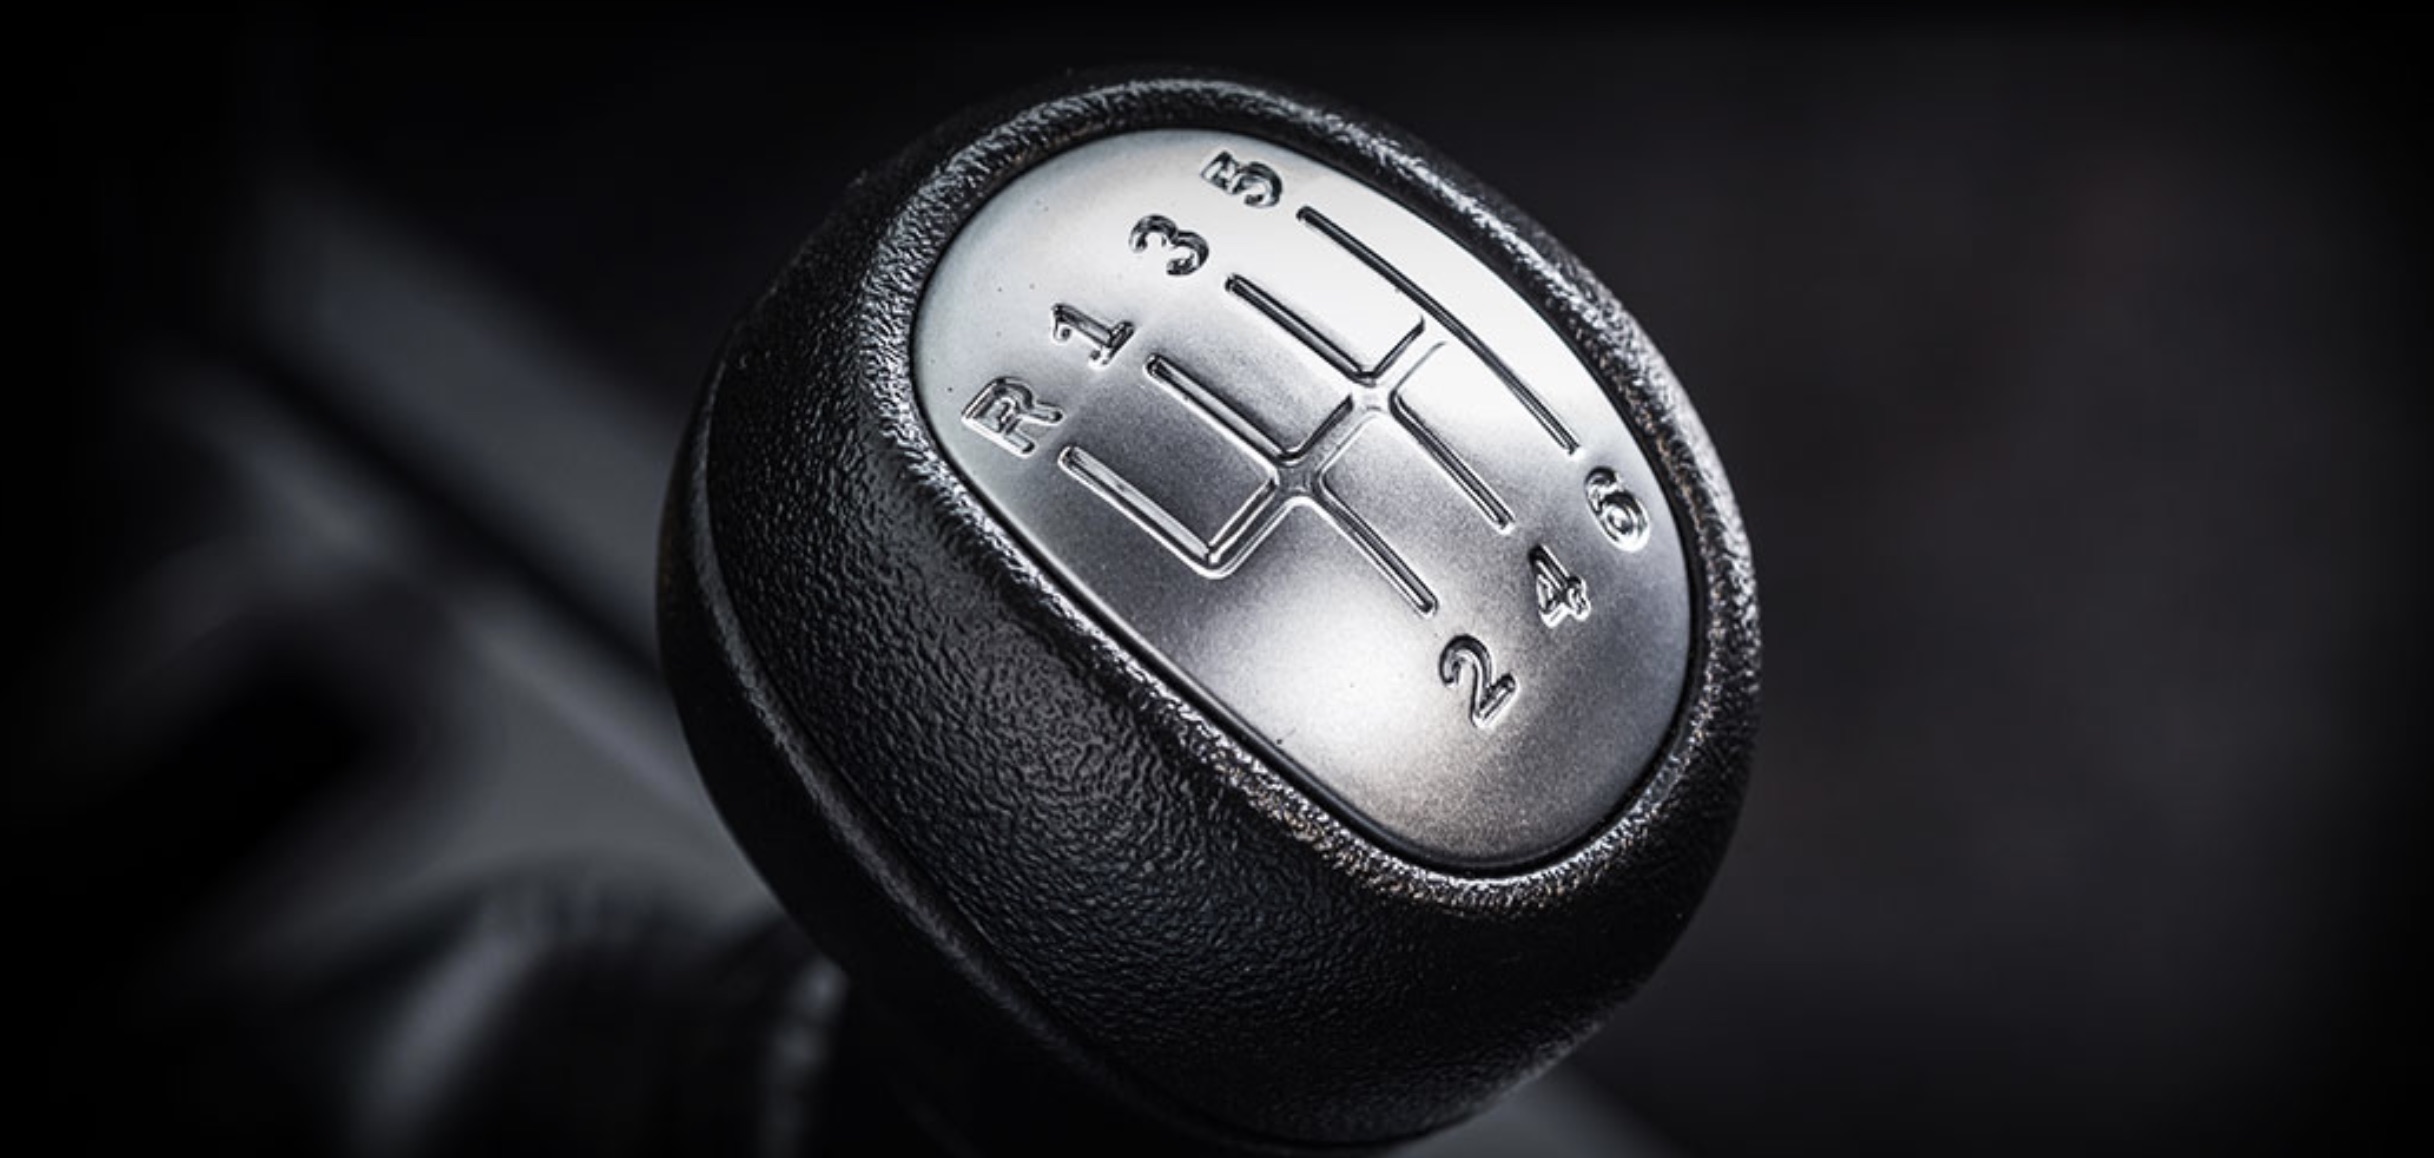 Next-gen Mahindra Scorpio Pik Up manual transmission